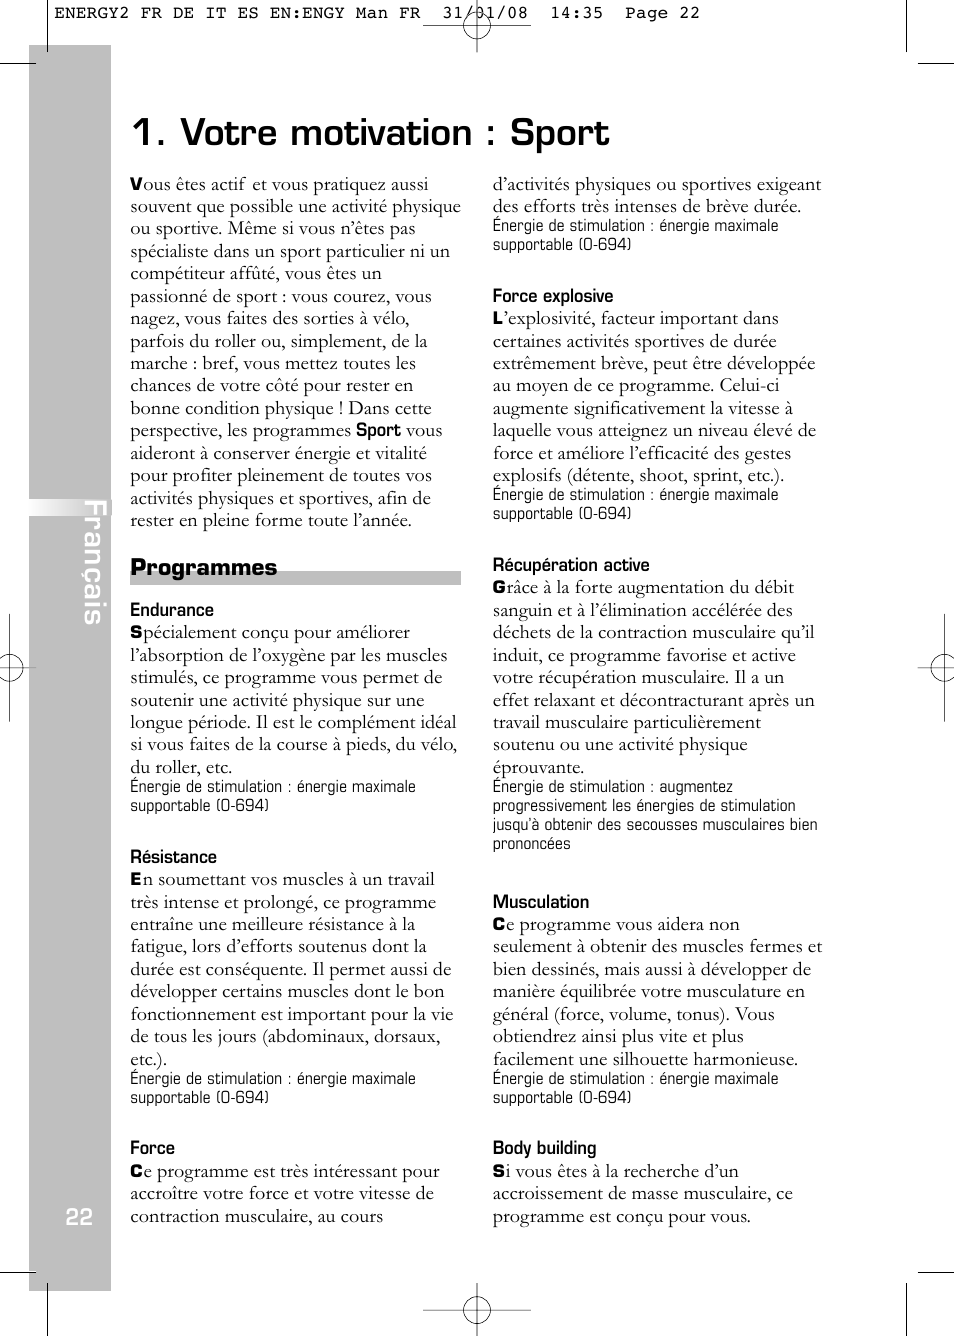 Votre motivation : sport, Français | Compex Energy mi-Ready User Manual |  Page 24 / 183 | Original mode